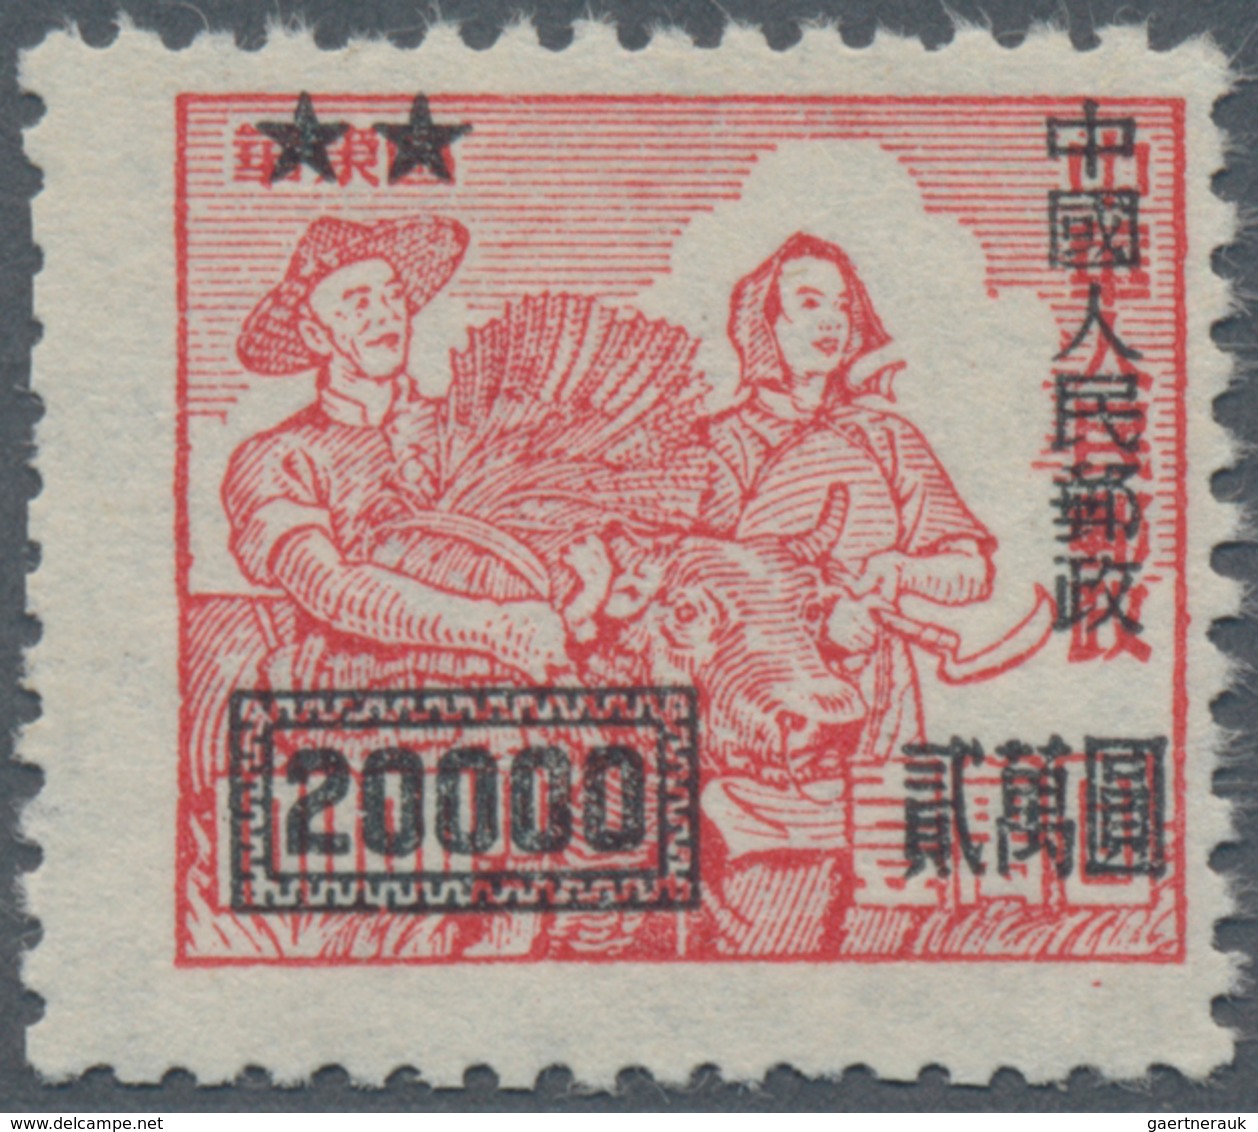 China - Volksrepublik: 1950, $20000 On $10000 Red, Unused No Gum As Issued, Irregular Perfs. Michel - Cartas & Documentos